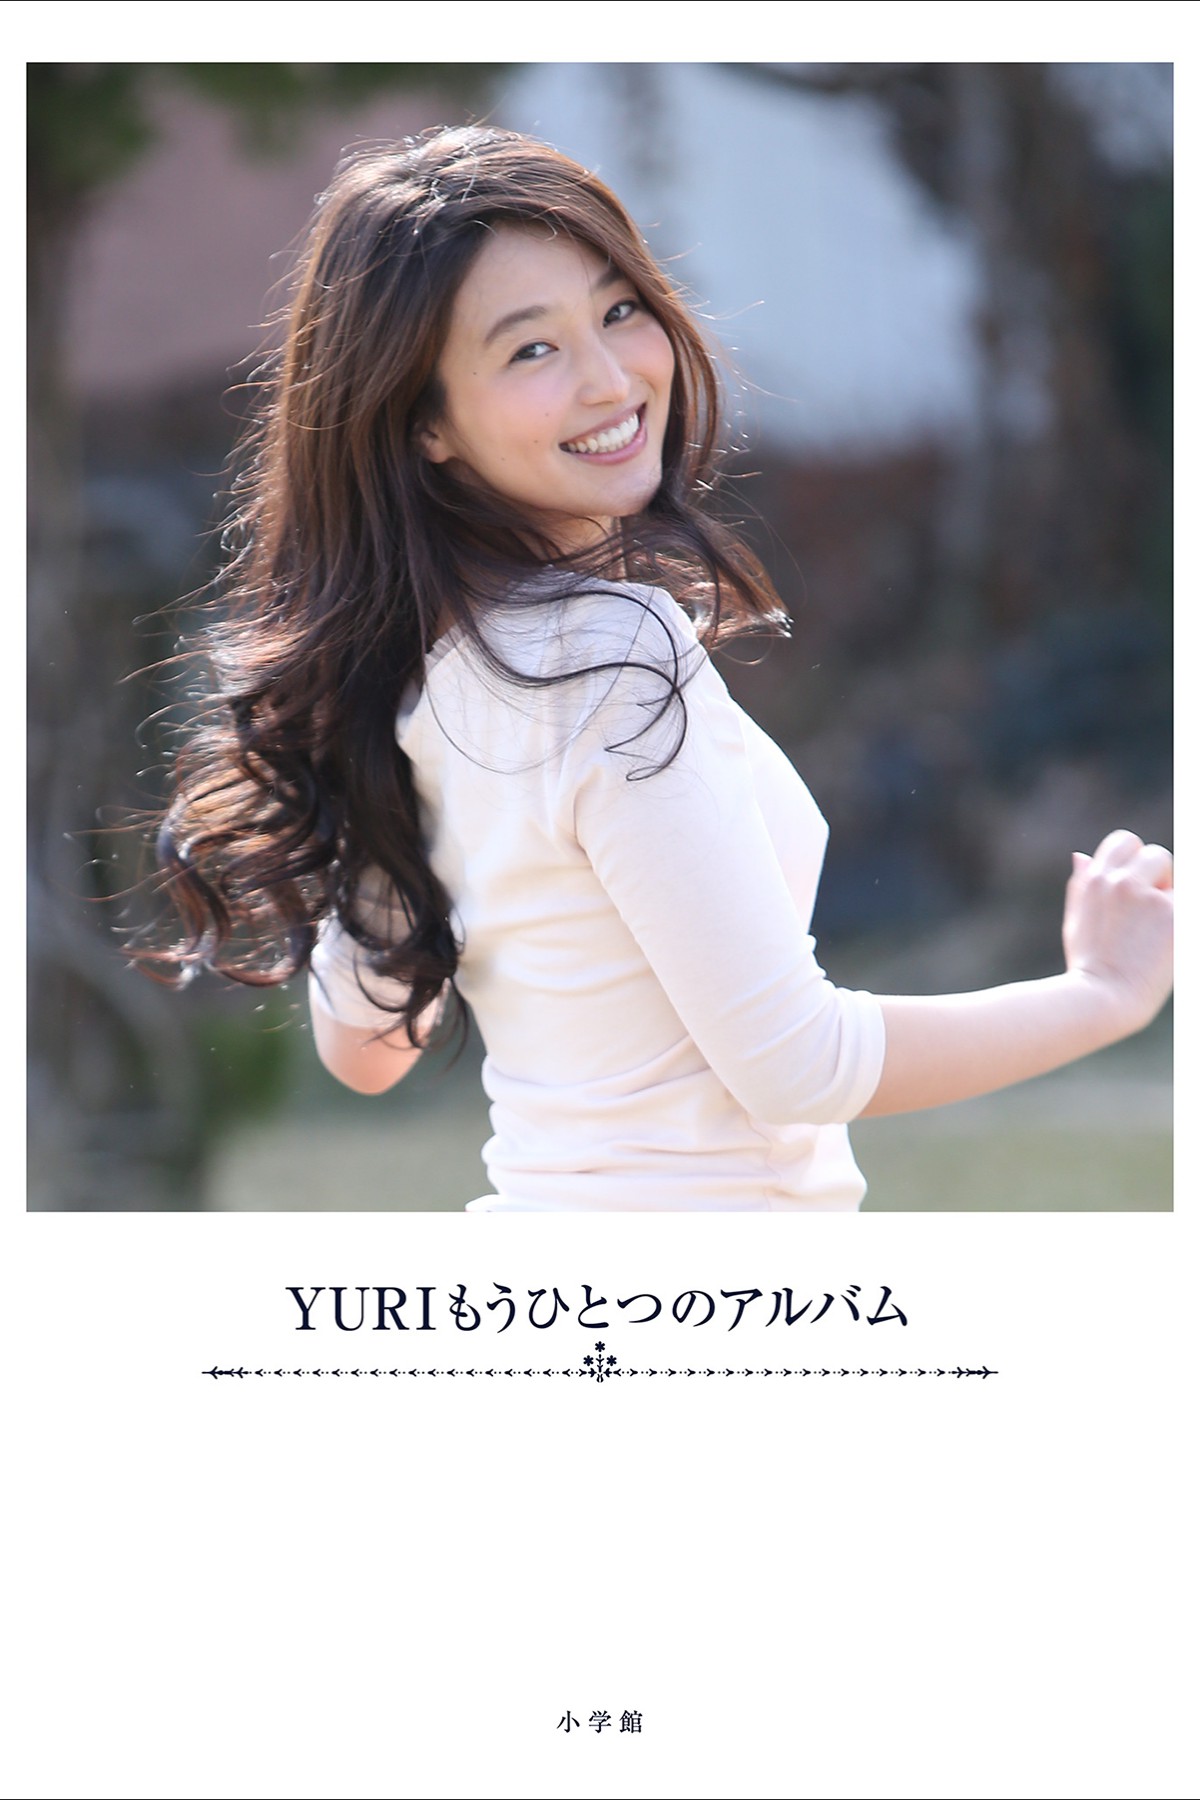 Photobook Yuri – Another album